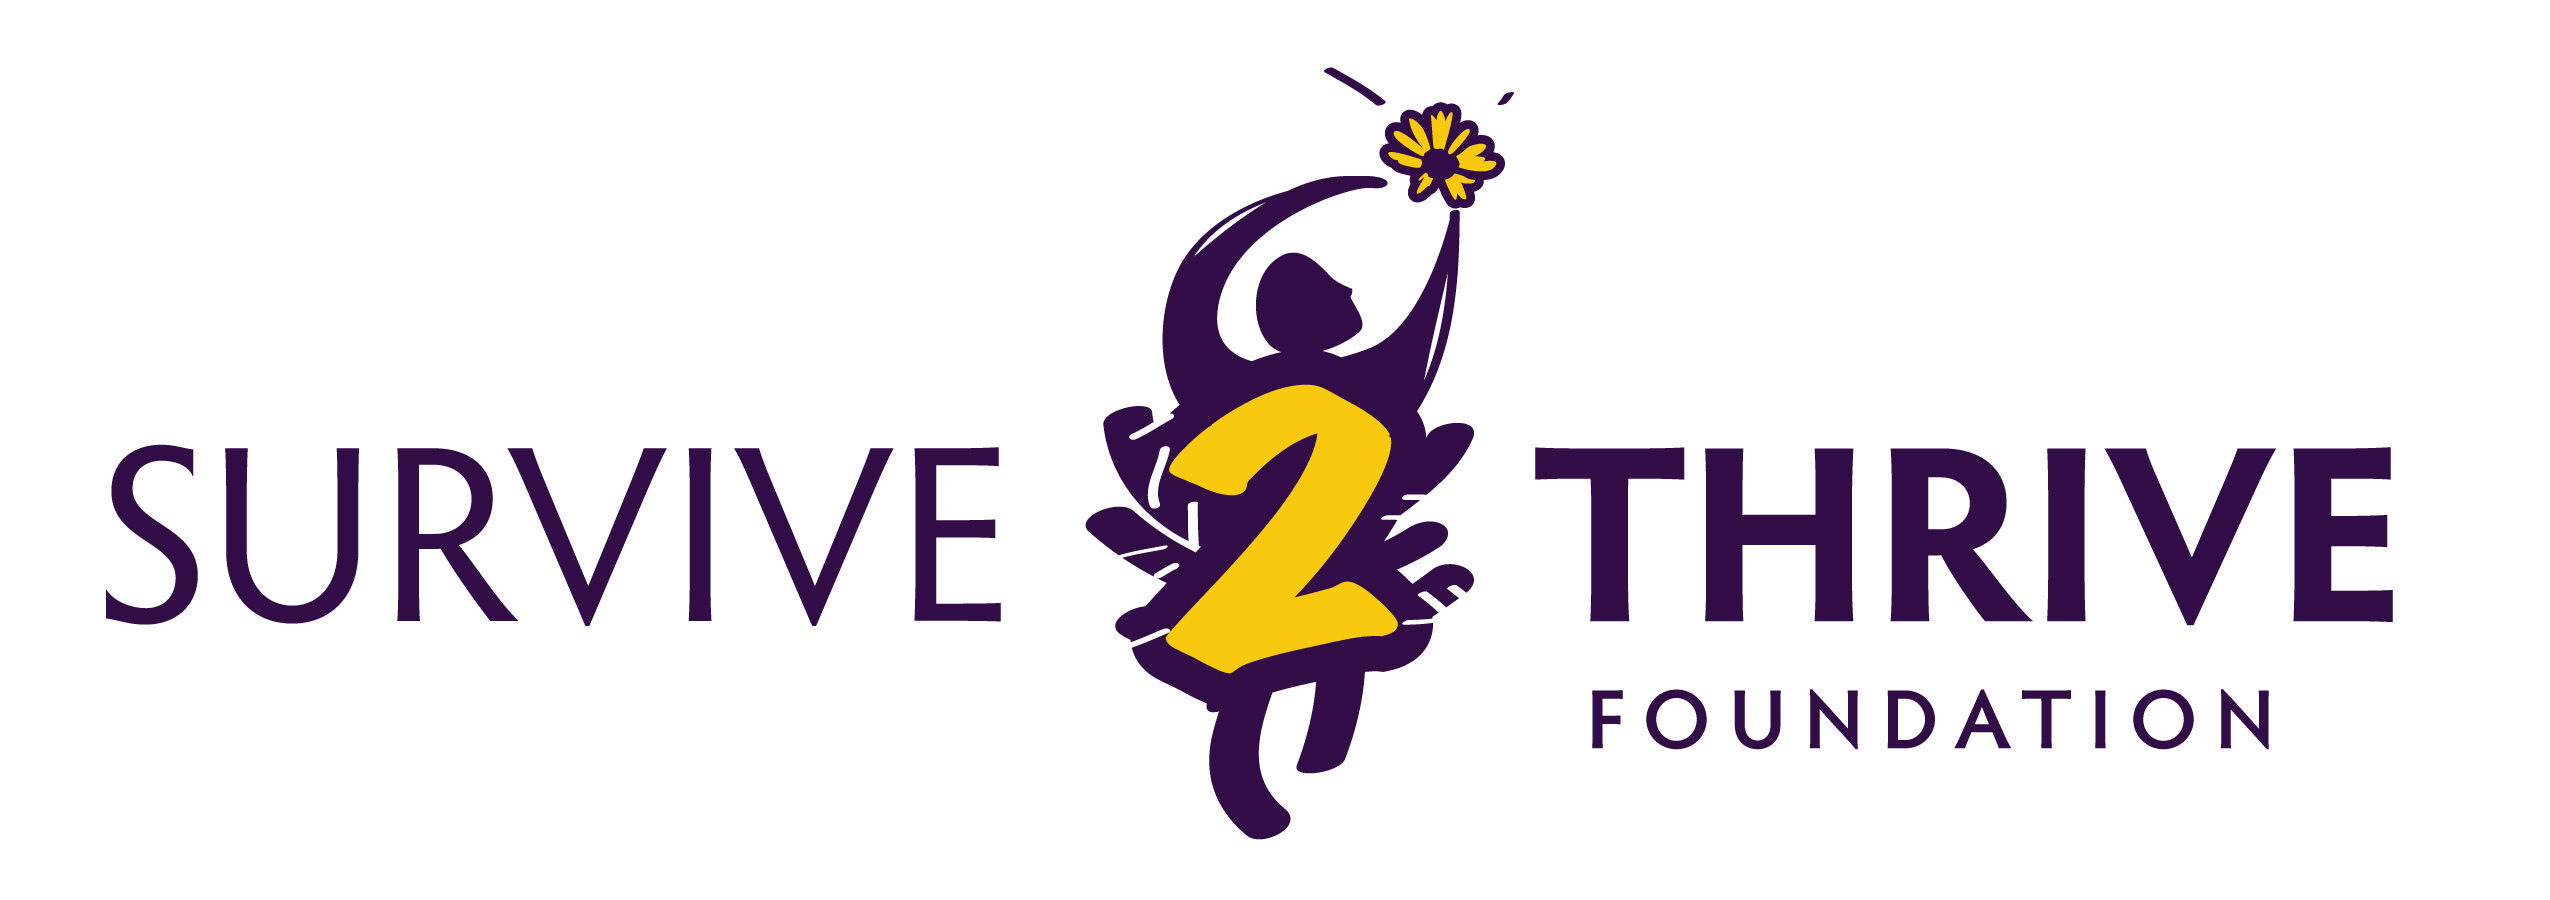 Survive2Thrive Foundation